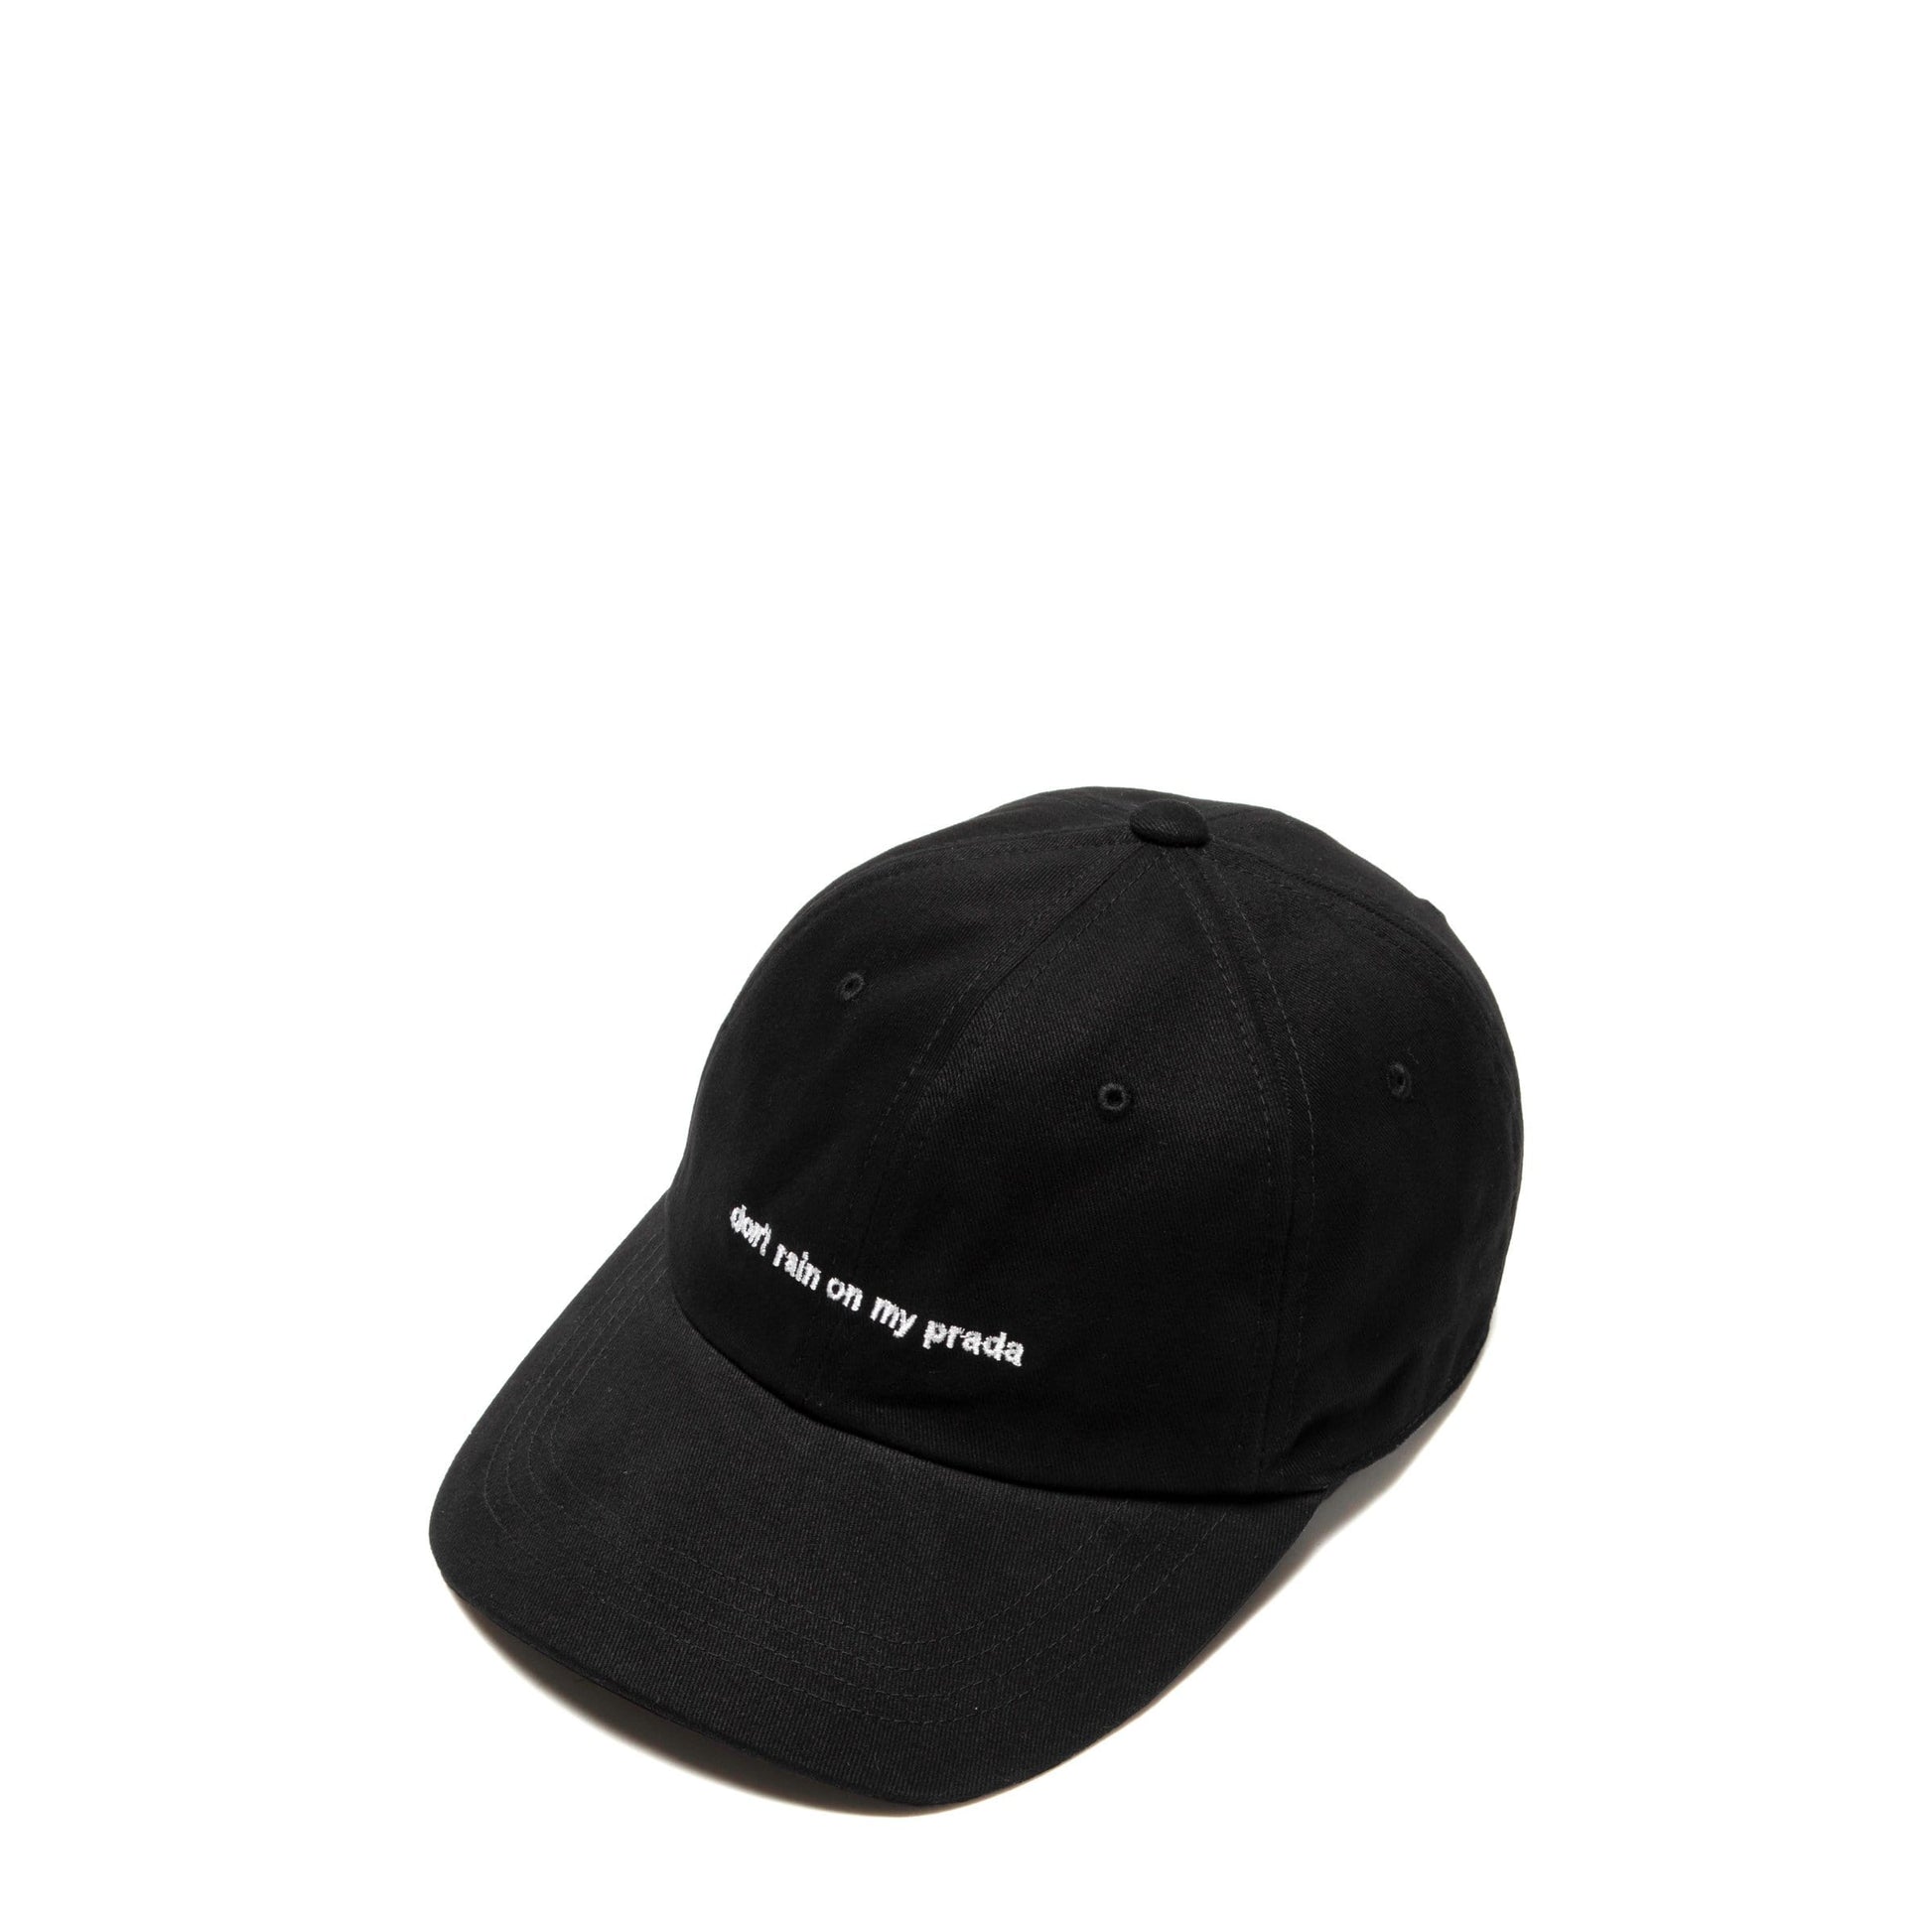 GRINDLONDON Headwear BLACK / O/S / SS2093 RAIN ON MY PRADA CAP